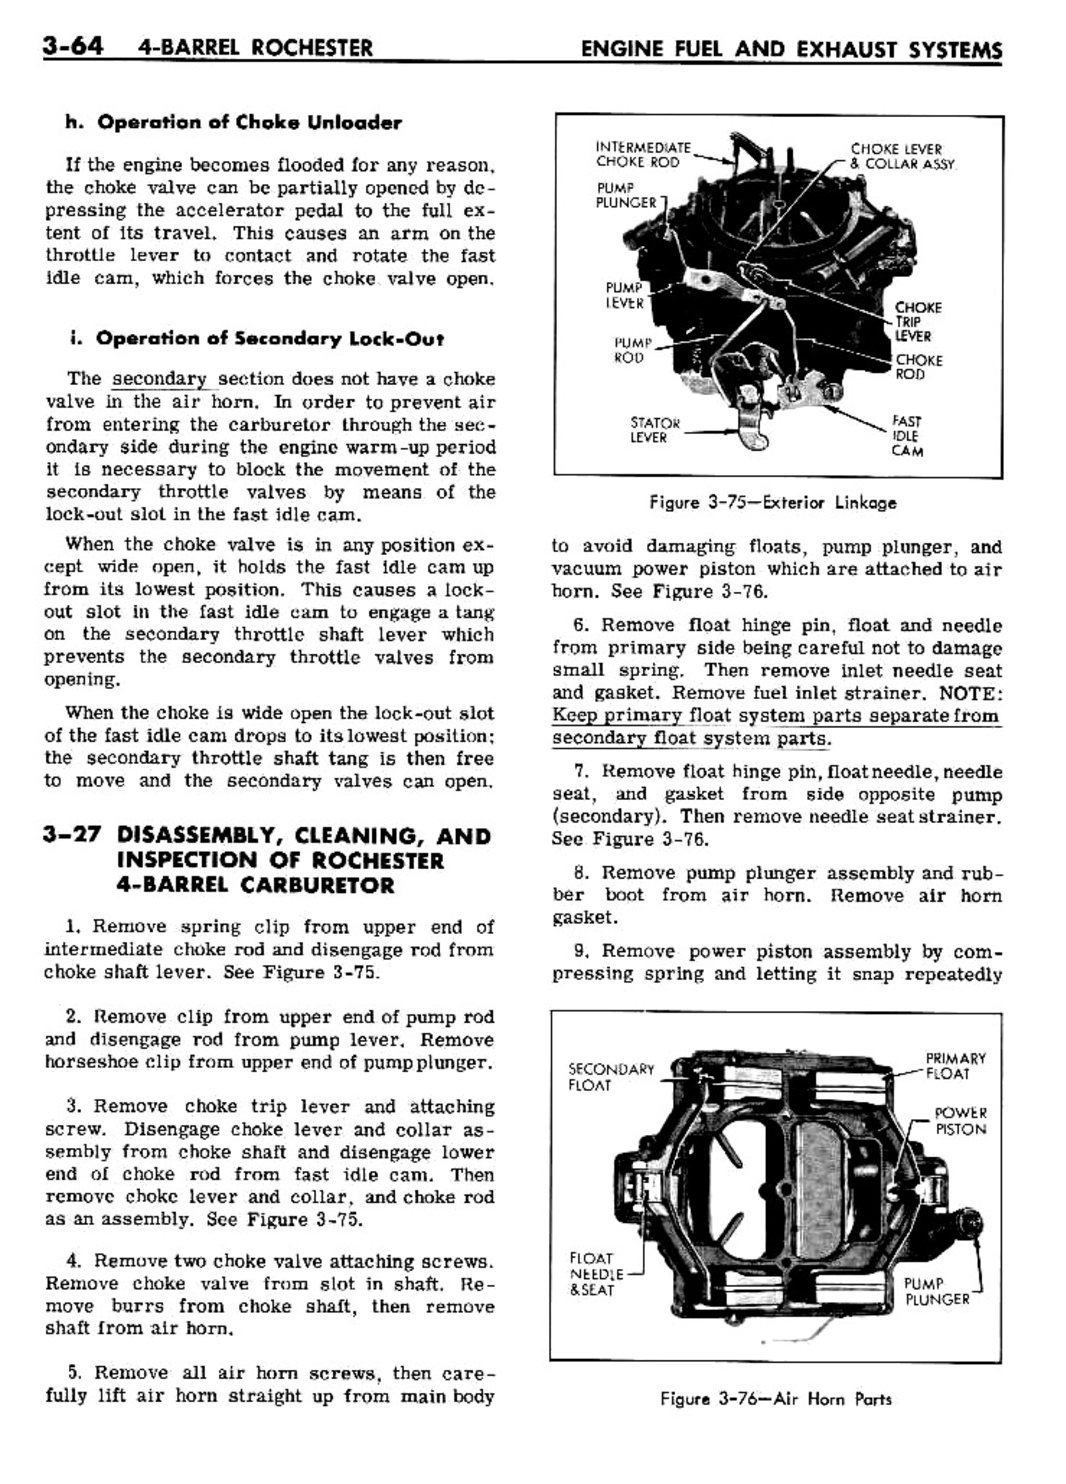 n_04 1961 Buick Shop Manual - Engine Fuel & Exhaust-064-064.jpg